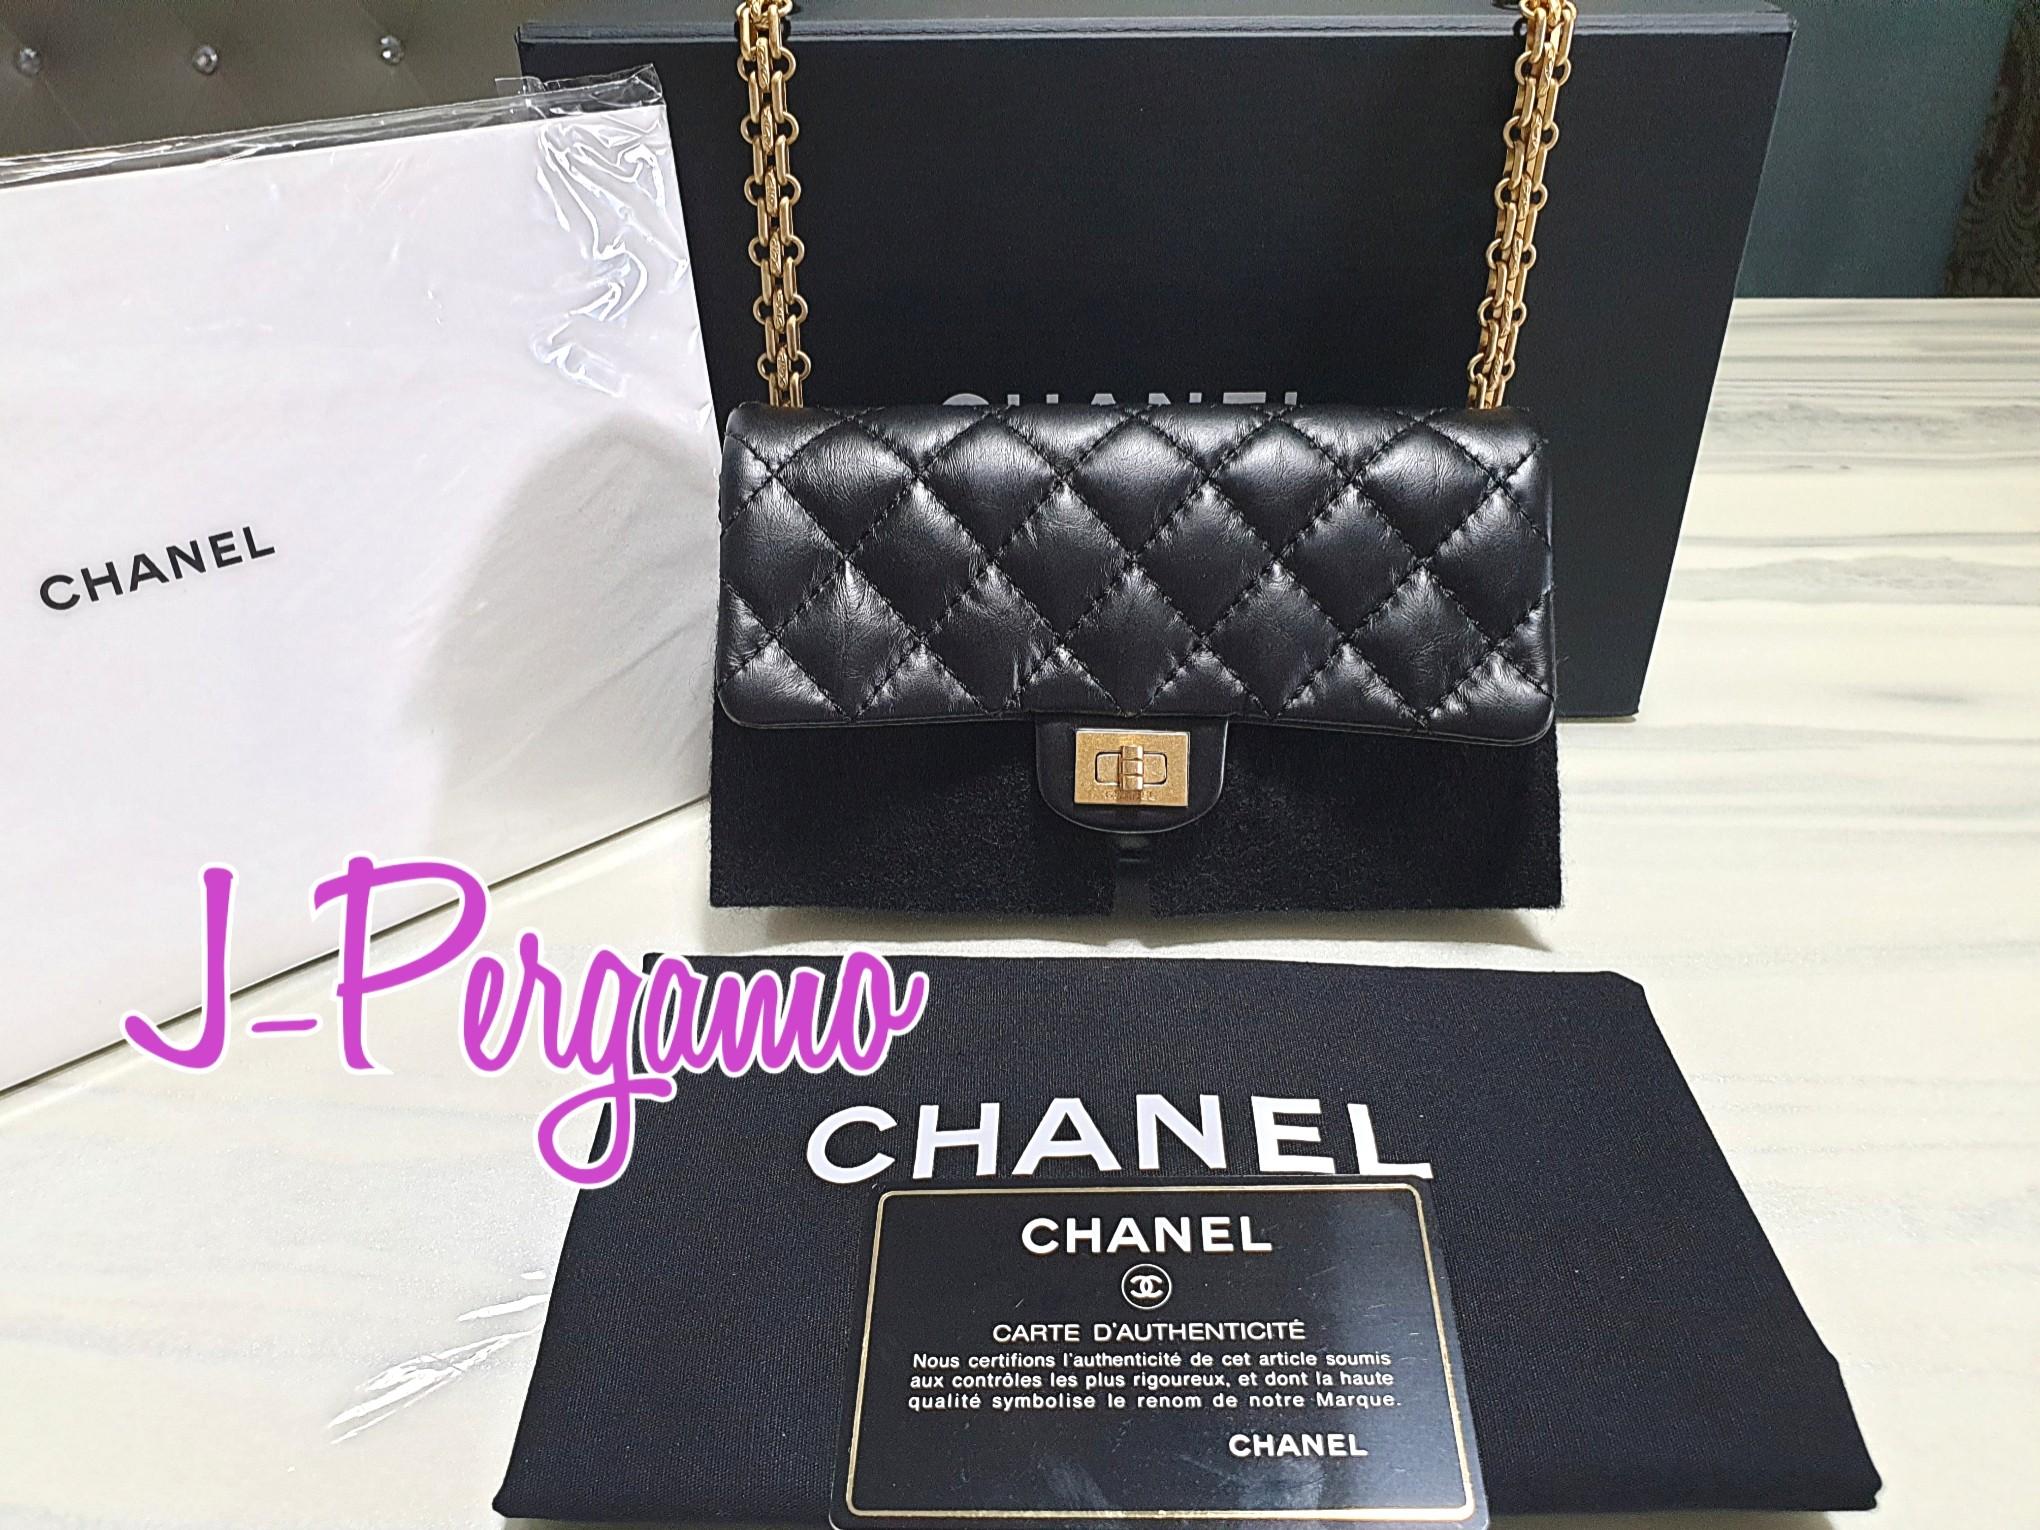 Chanel Handbag Prices In Uaemex | Paul Smith